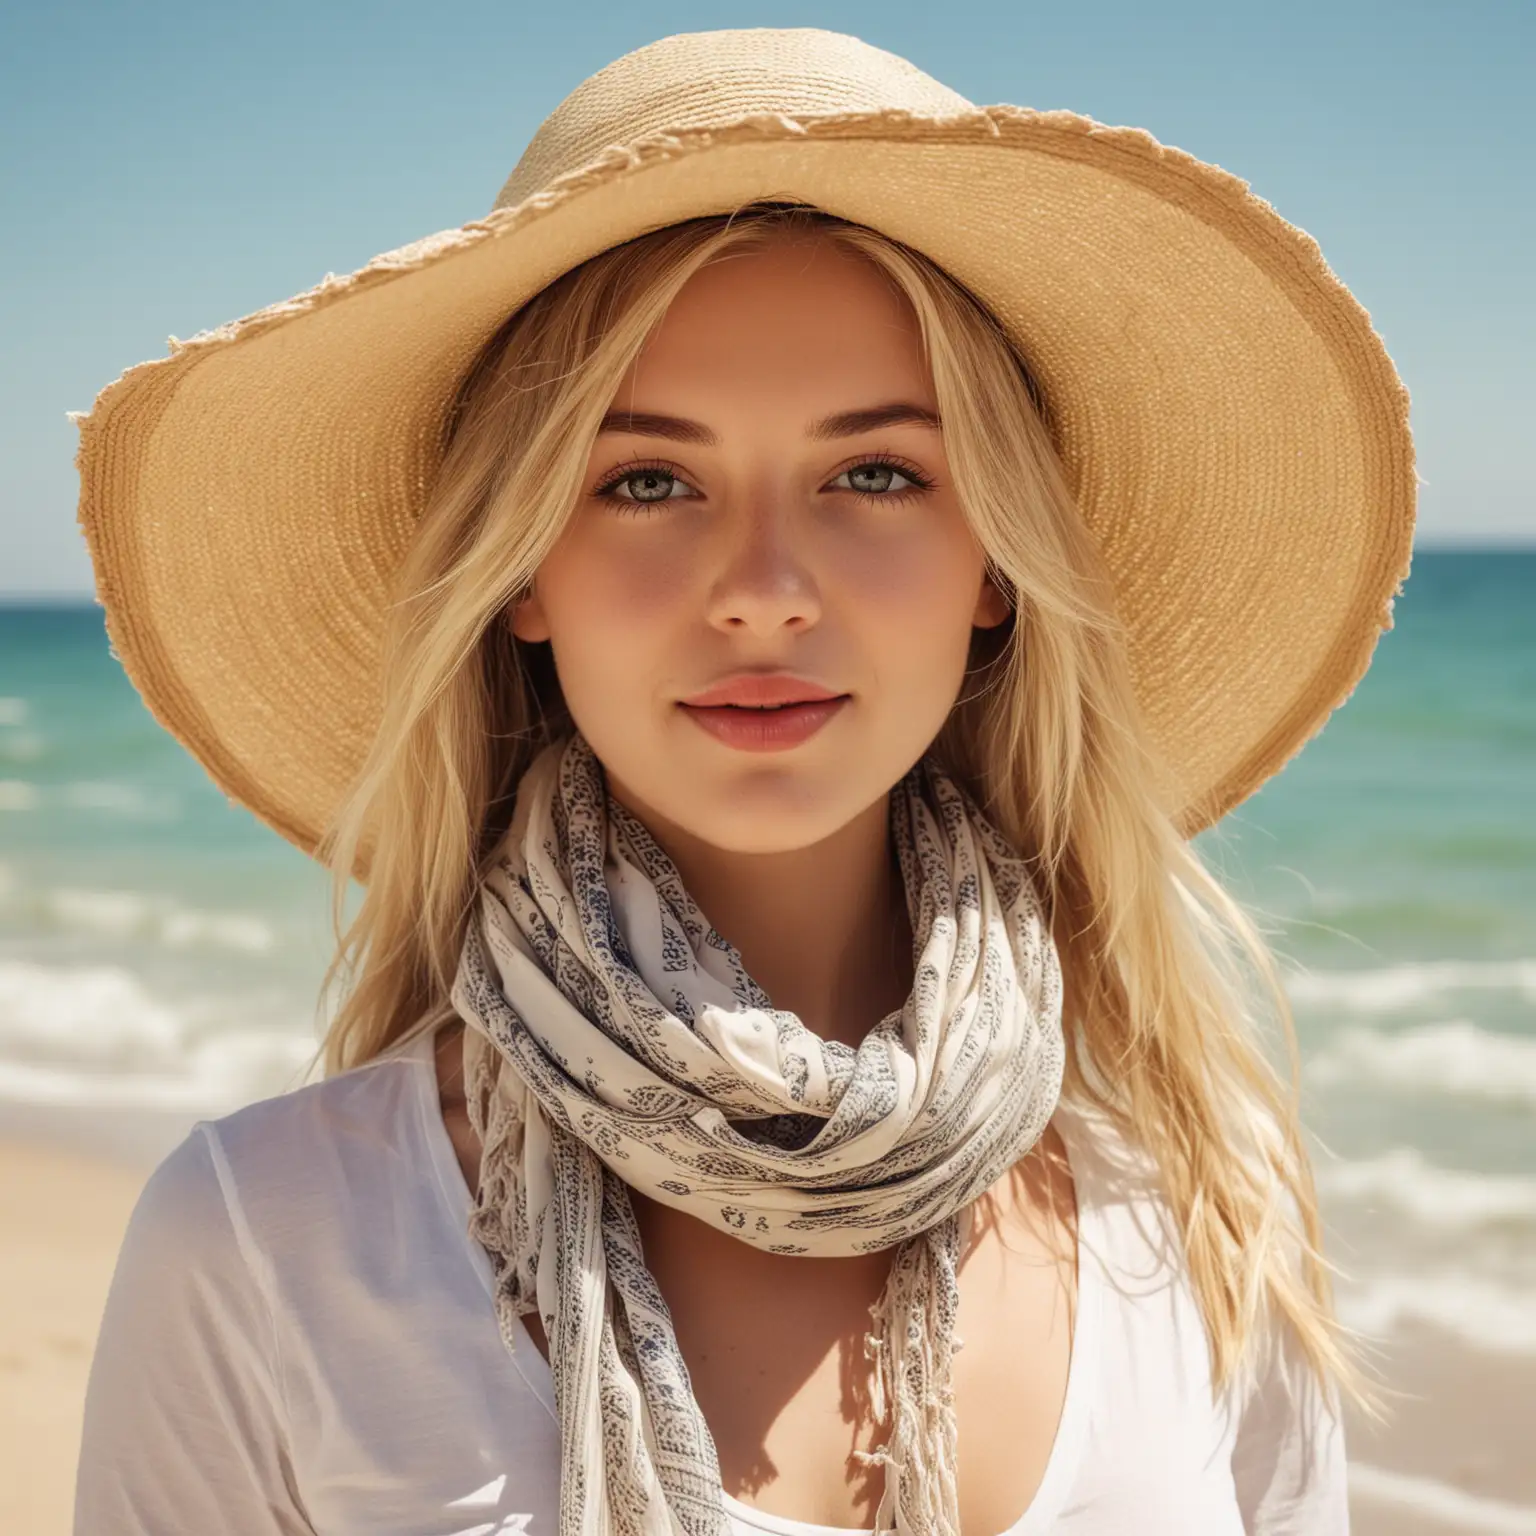 Sunlit Serenity Blonde Woman Enjoying a Beach Day